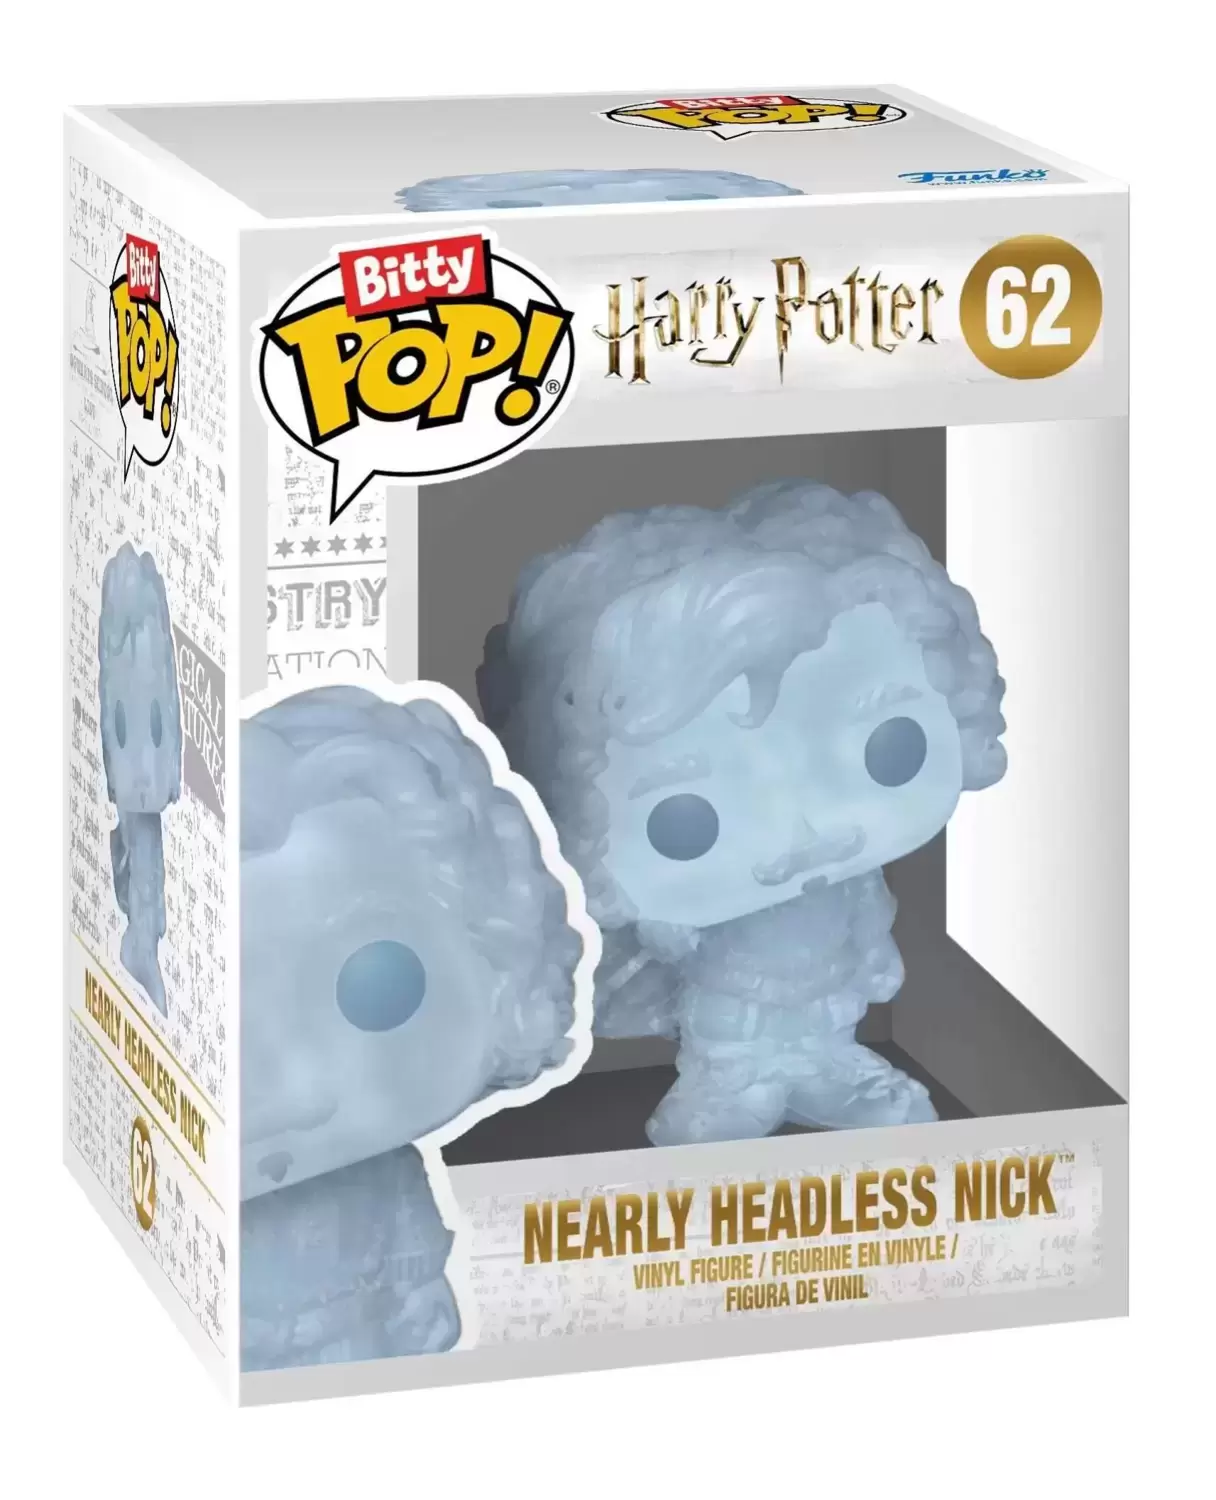 Harry Potter - Nearly Headless Nick - Bitty POP! action figure 62